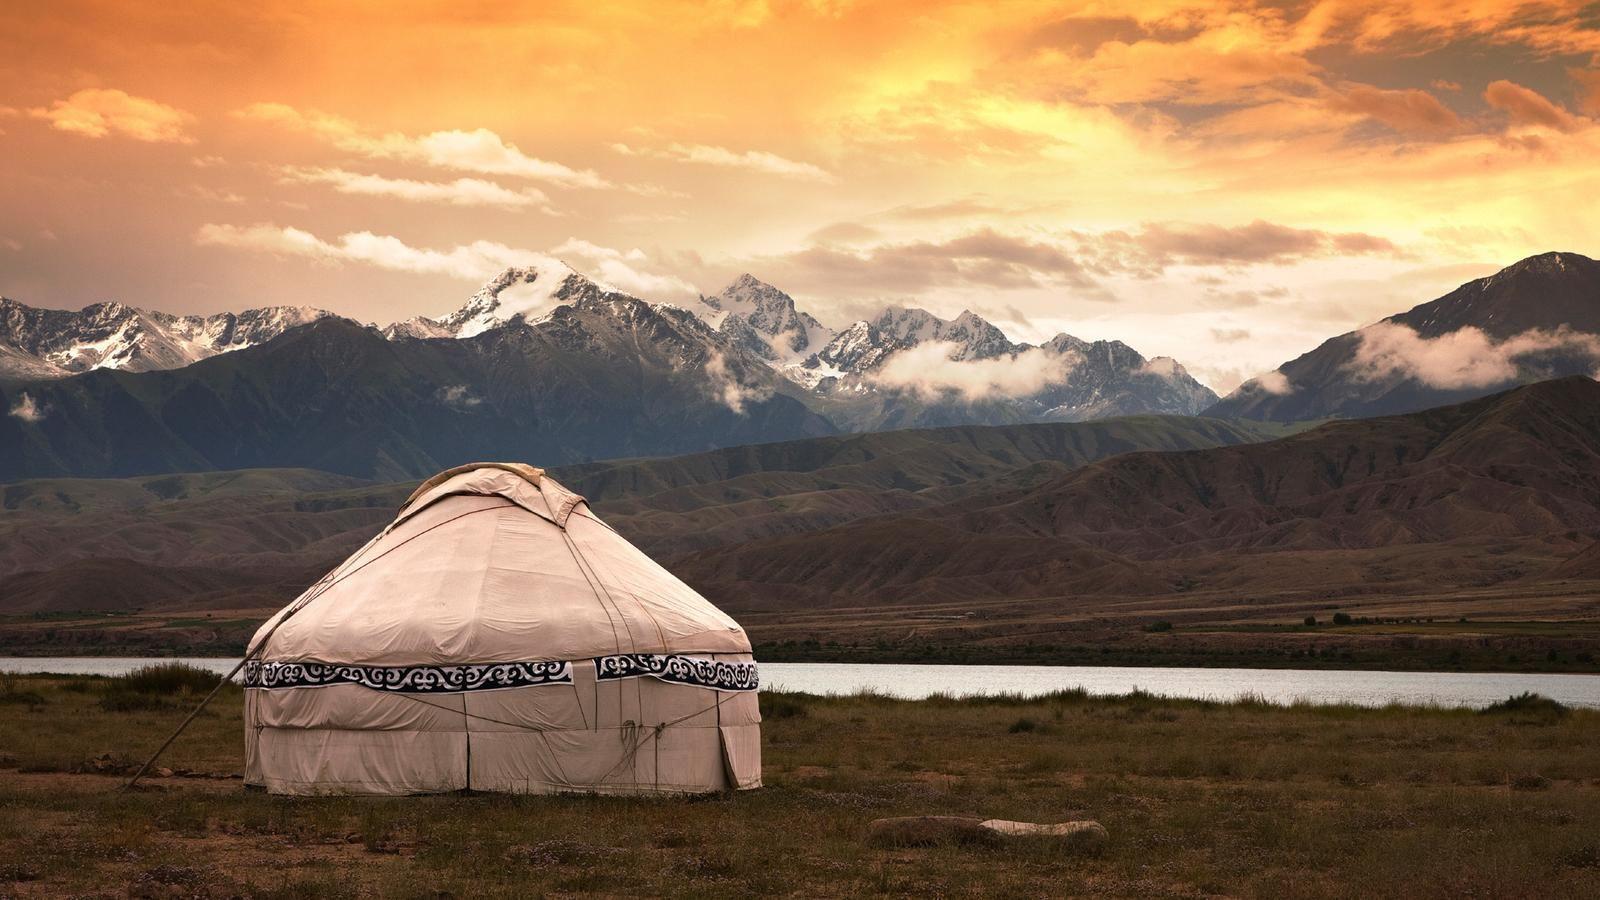 Mongolian yurt among a grassy and rocky landscape in Mongolia